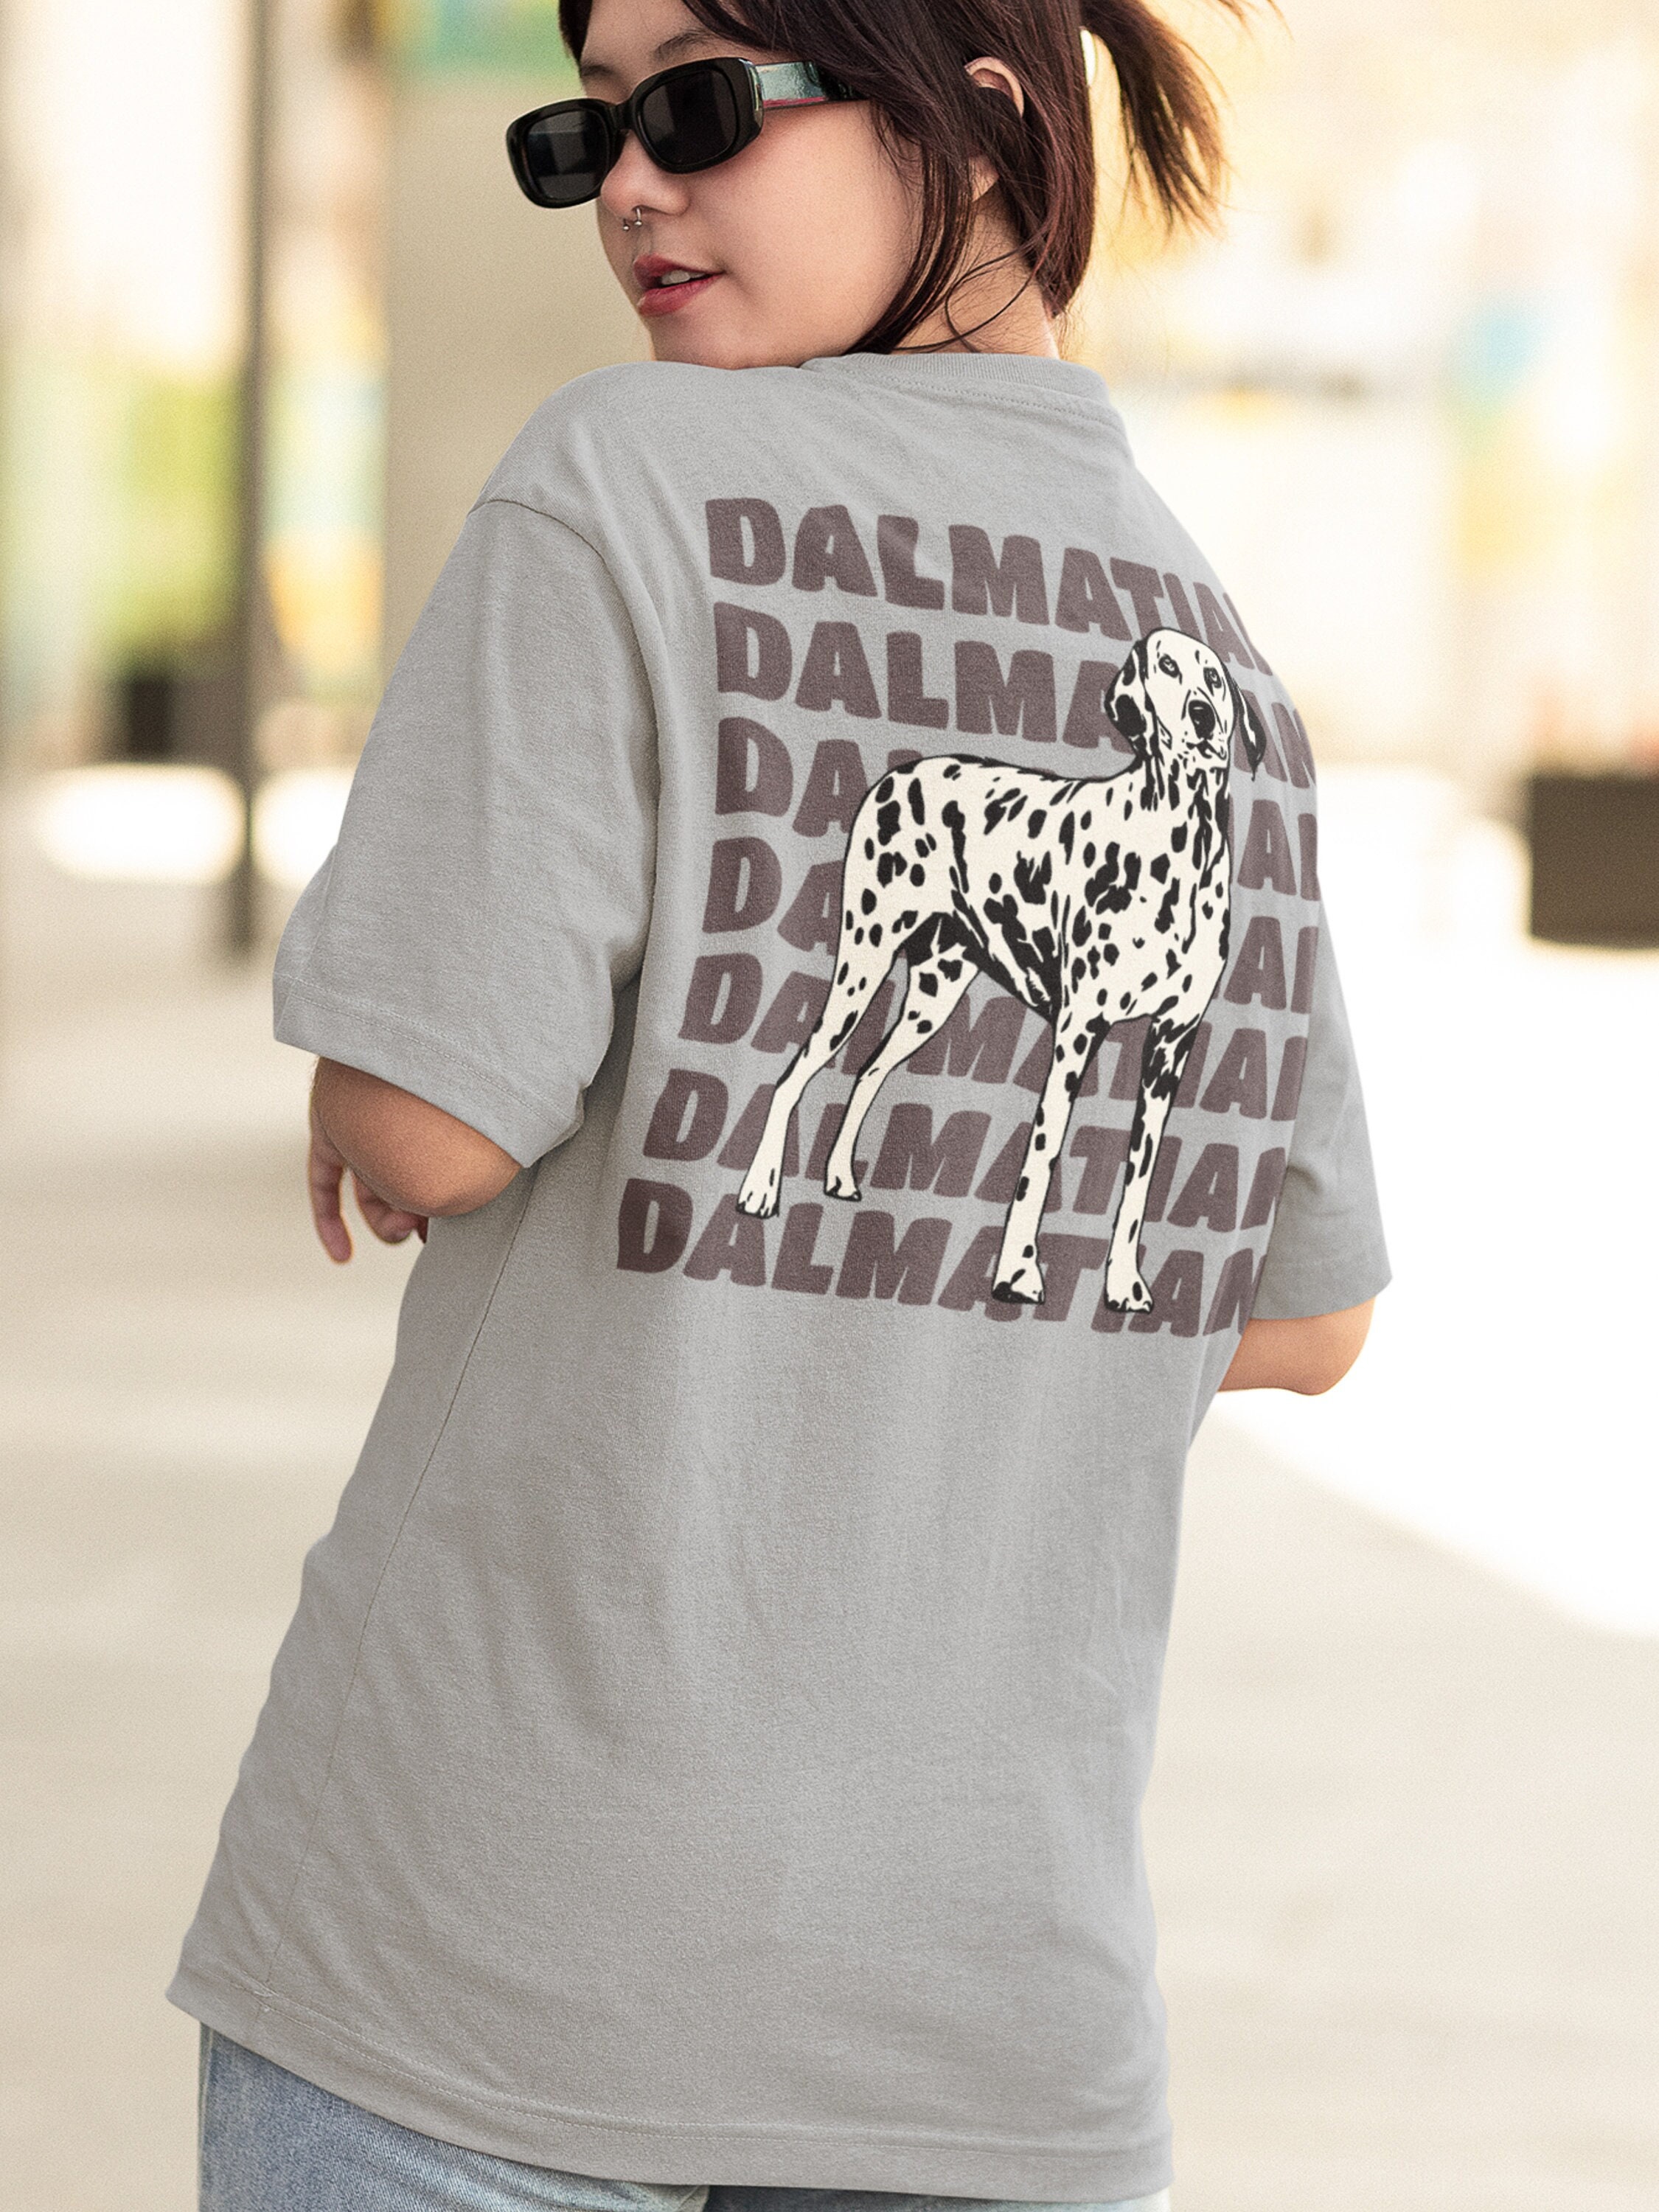 Retro Dalmatian T-shirt Perfect Gift for Dalmatian Dog Moms 